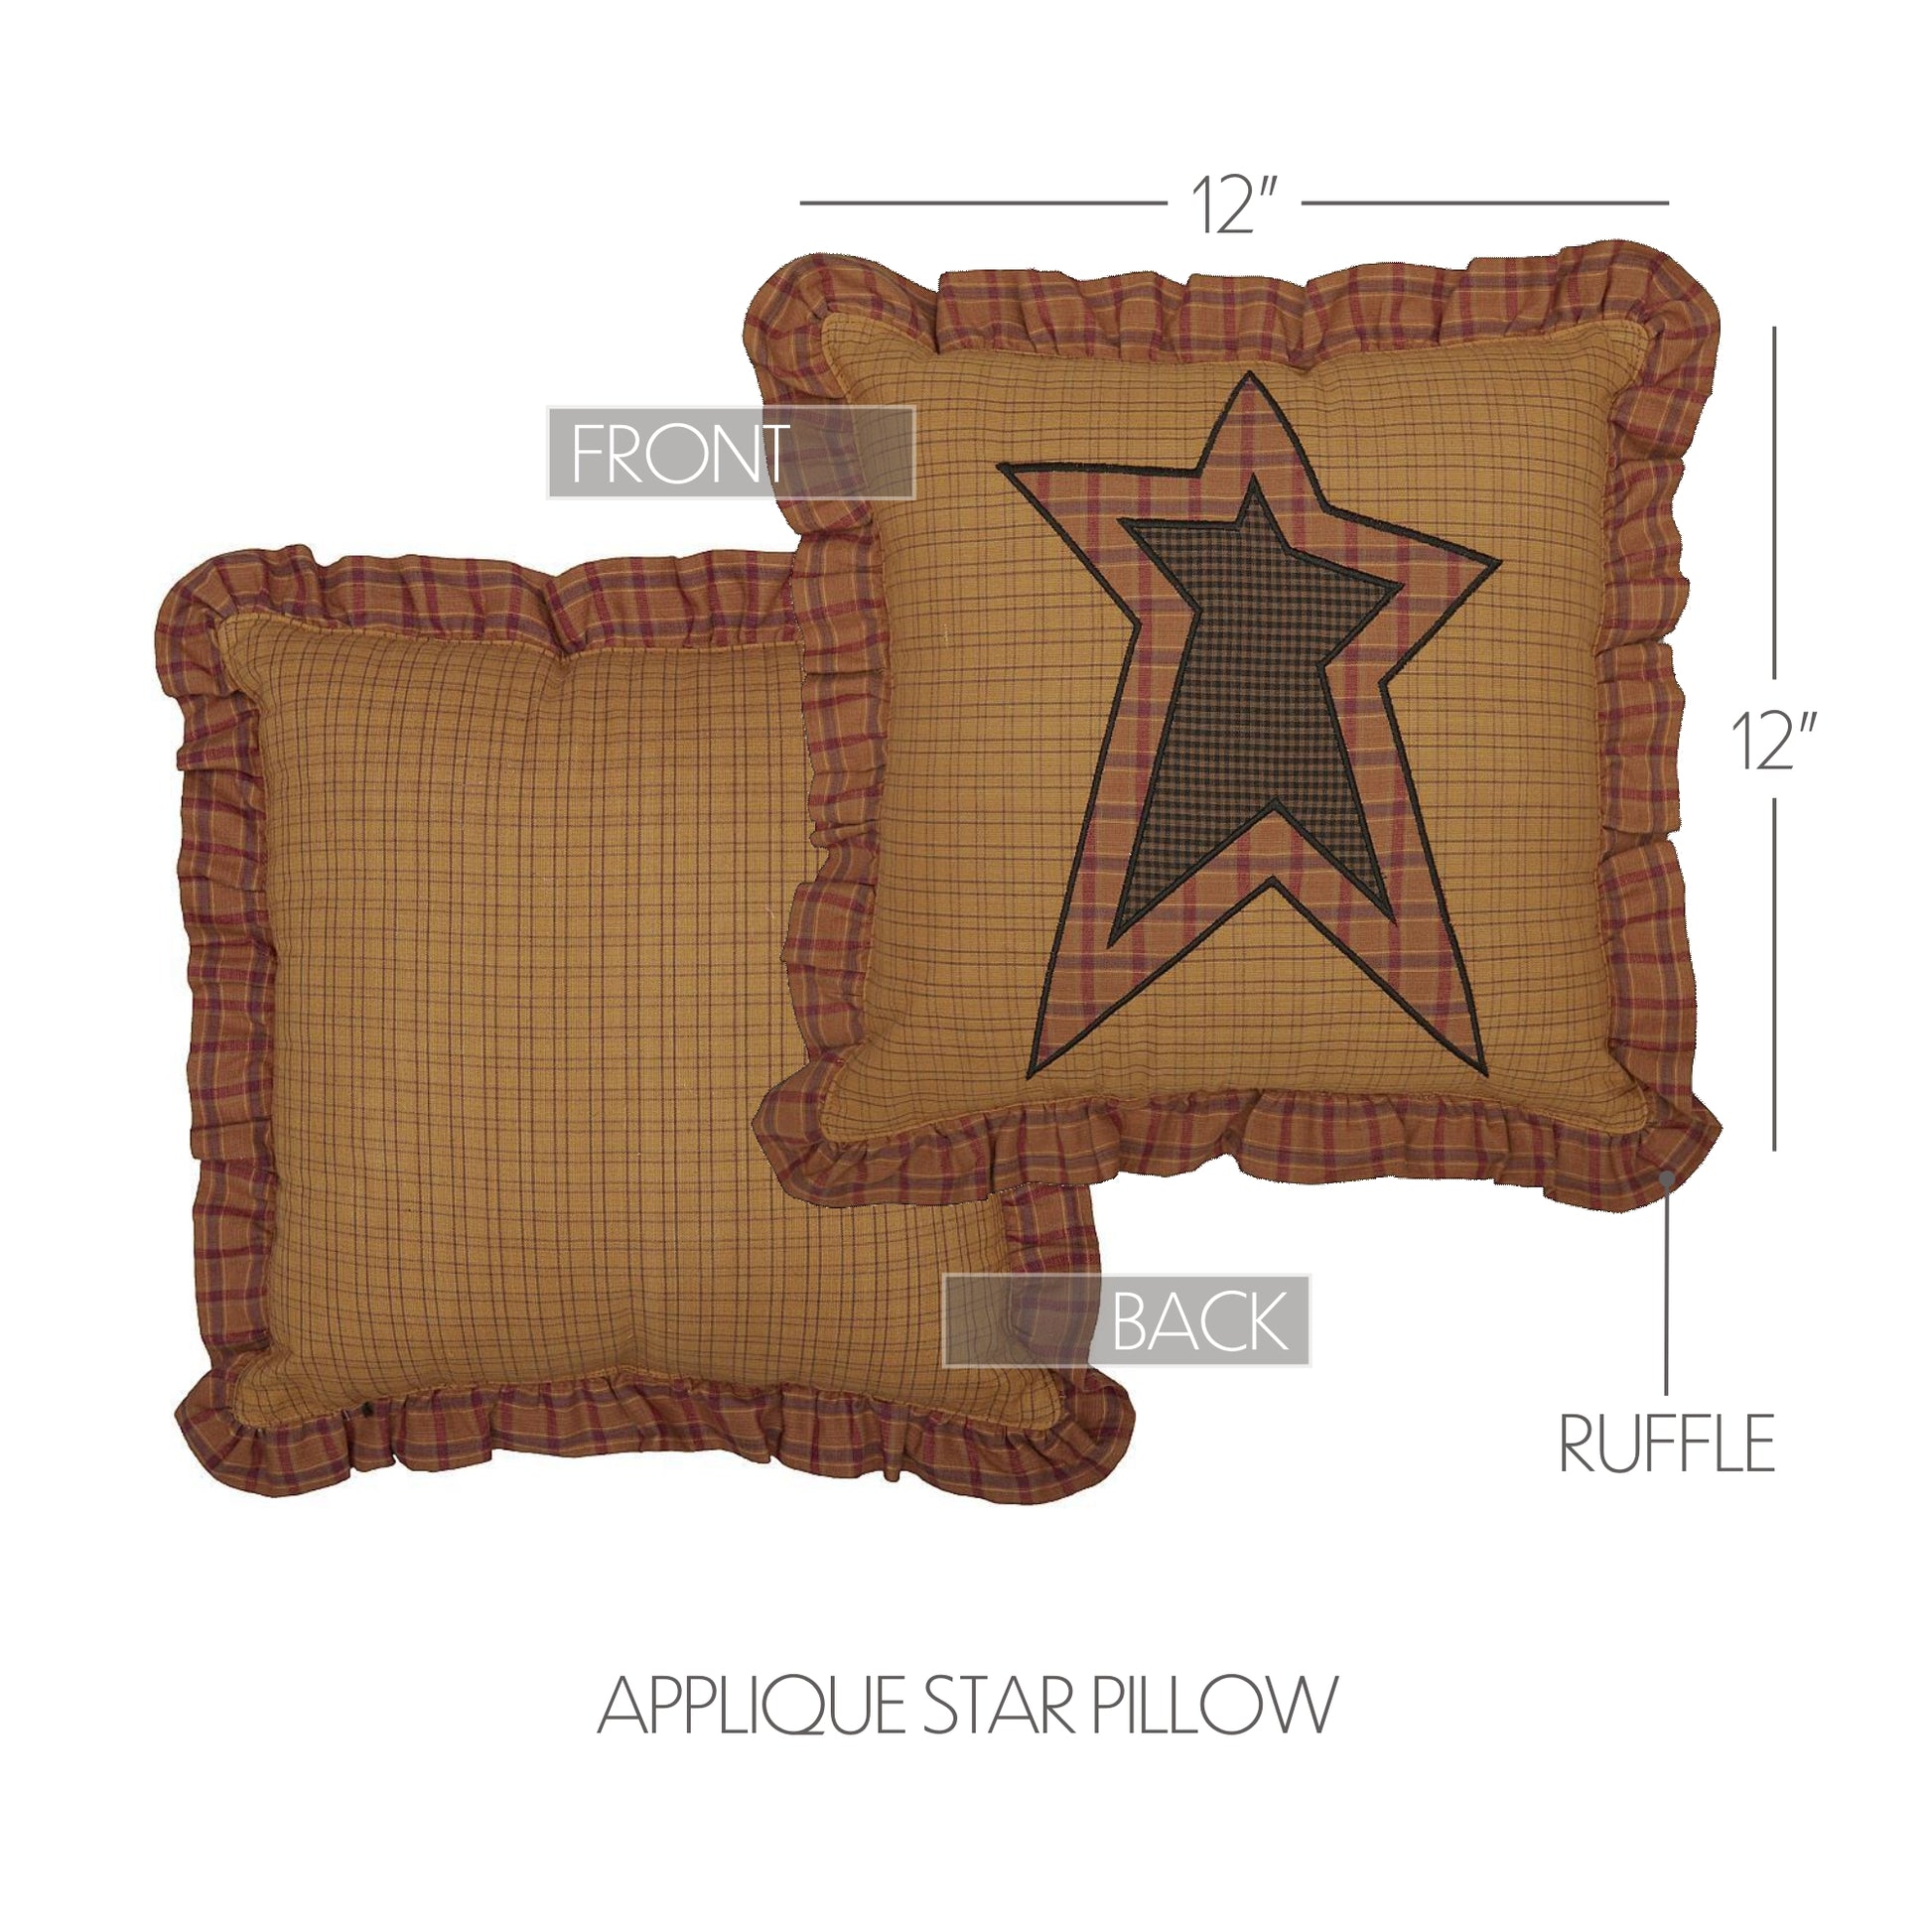 56781-Stratton-Applique-Star-Pillow-12x12-image-1